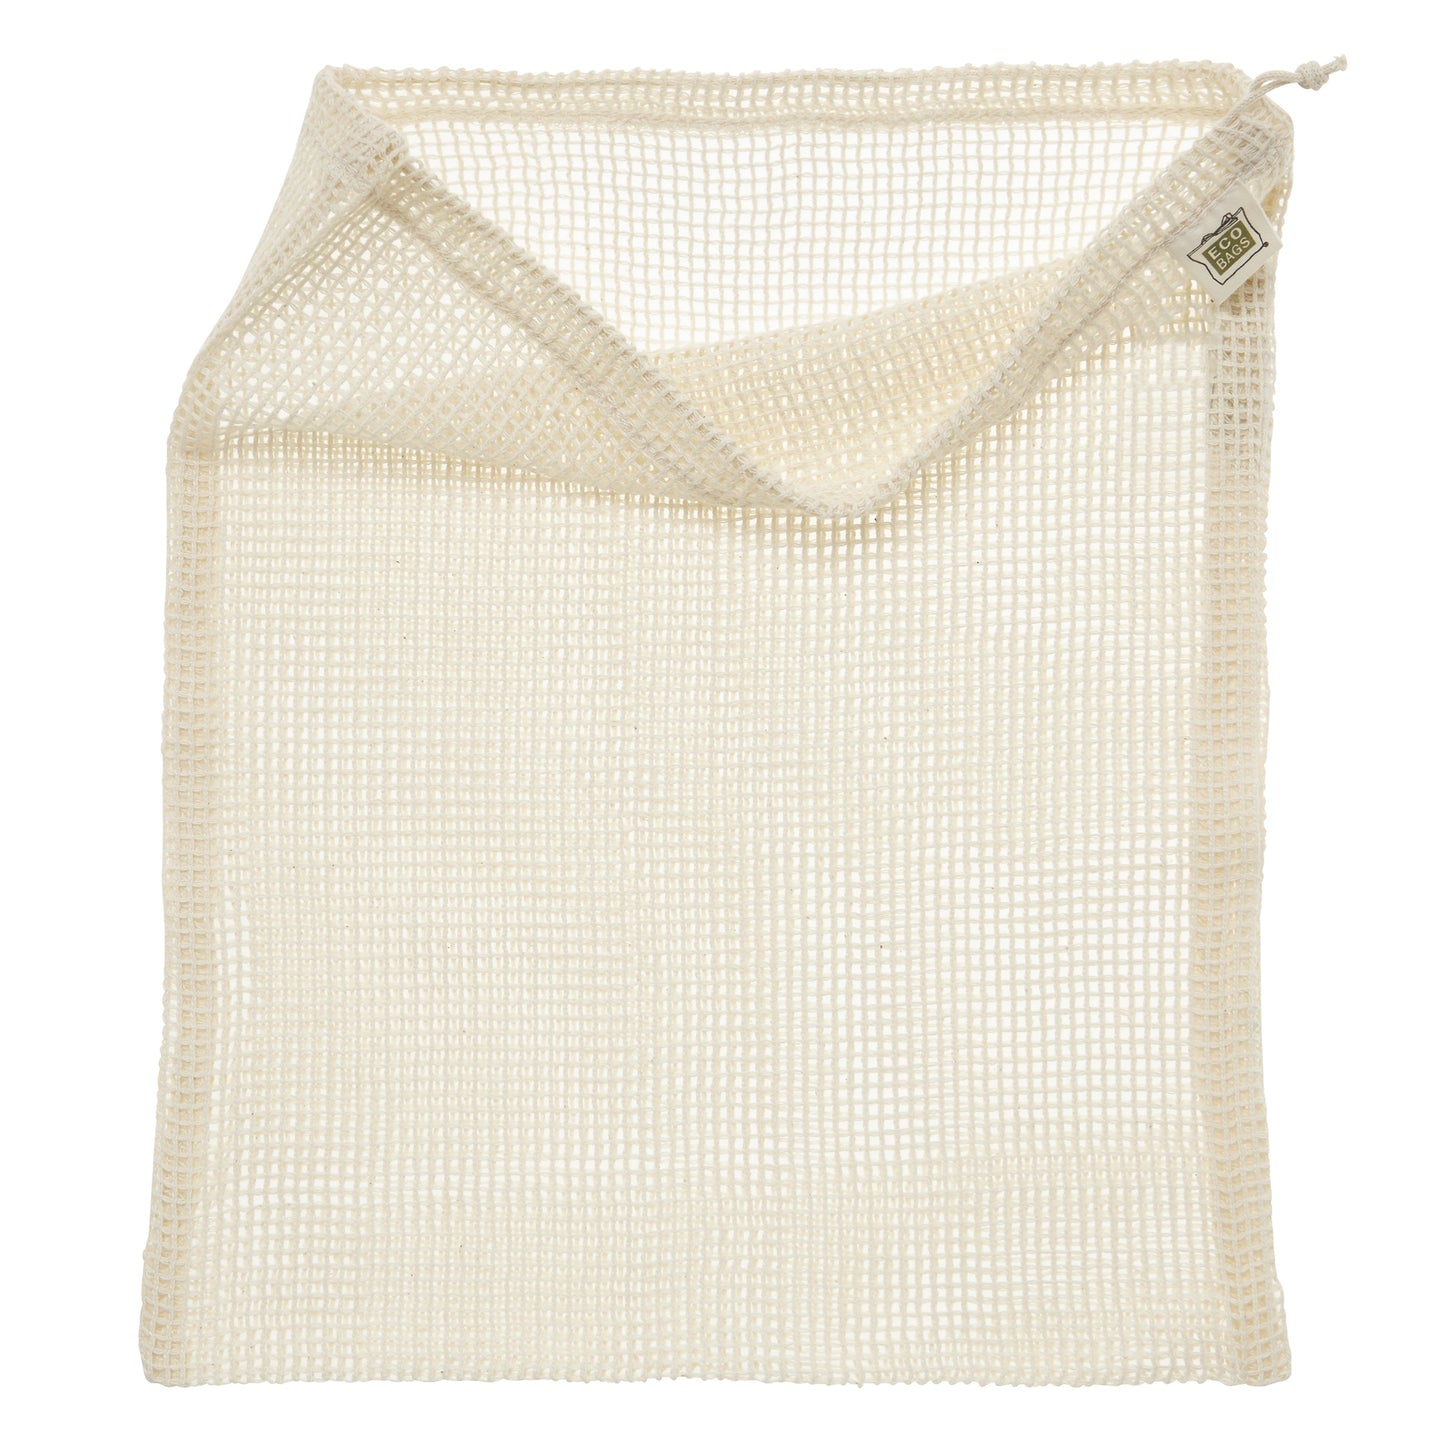 Set of 4 Large Organic Cotton Produce Bags